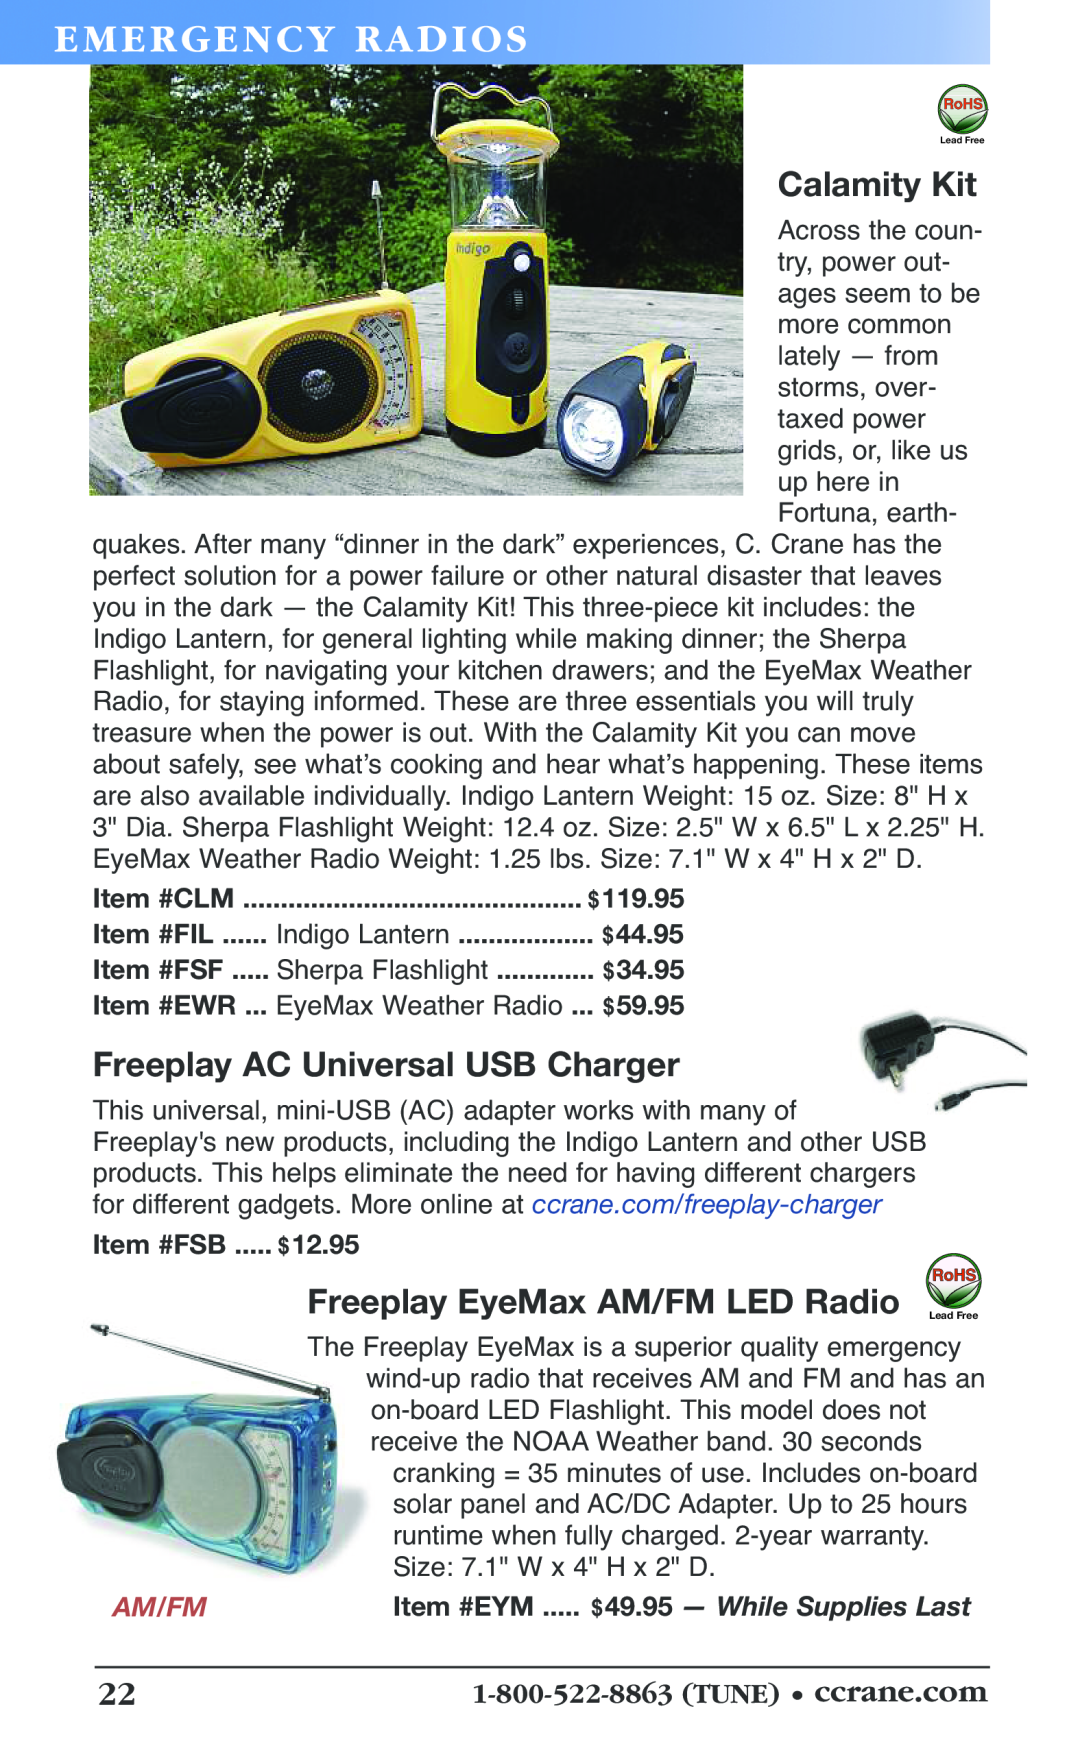 C. Crane 19f Em Erg Enc Y Radios, Calamity Kit, Freeplay AC Universal USB Charger, Freeplay EyeMax AM/FM LED Radio, $44.95 